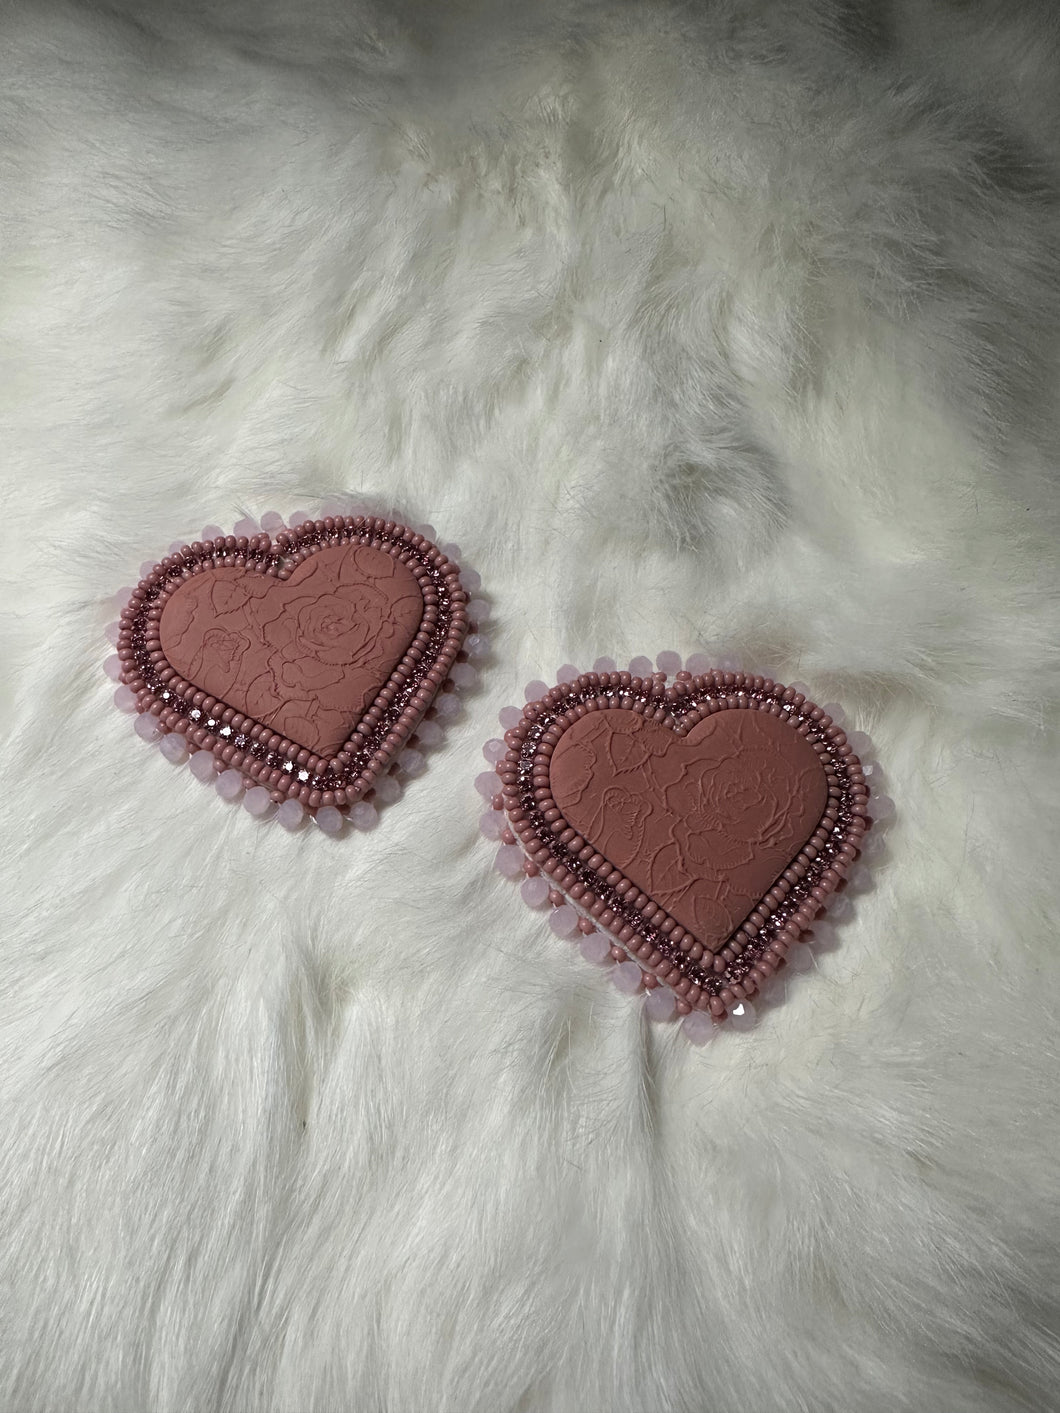 Large heart shaped beaded earrings